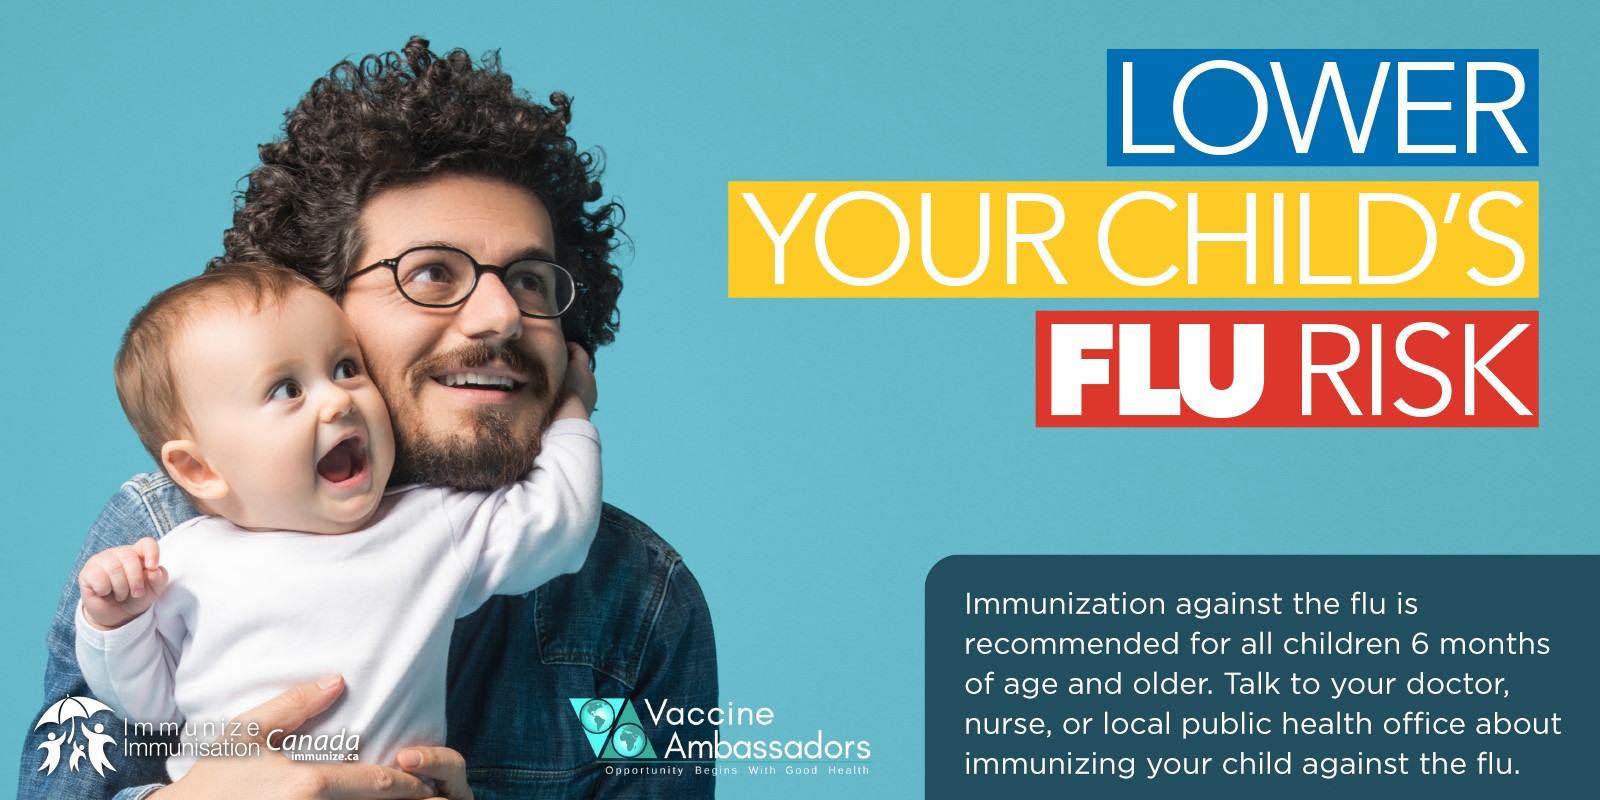 Lower your child's flu risk - children 6 months and older